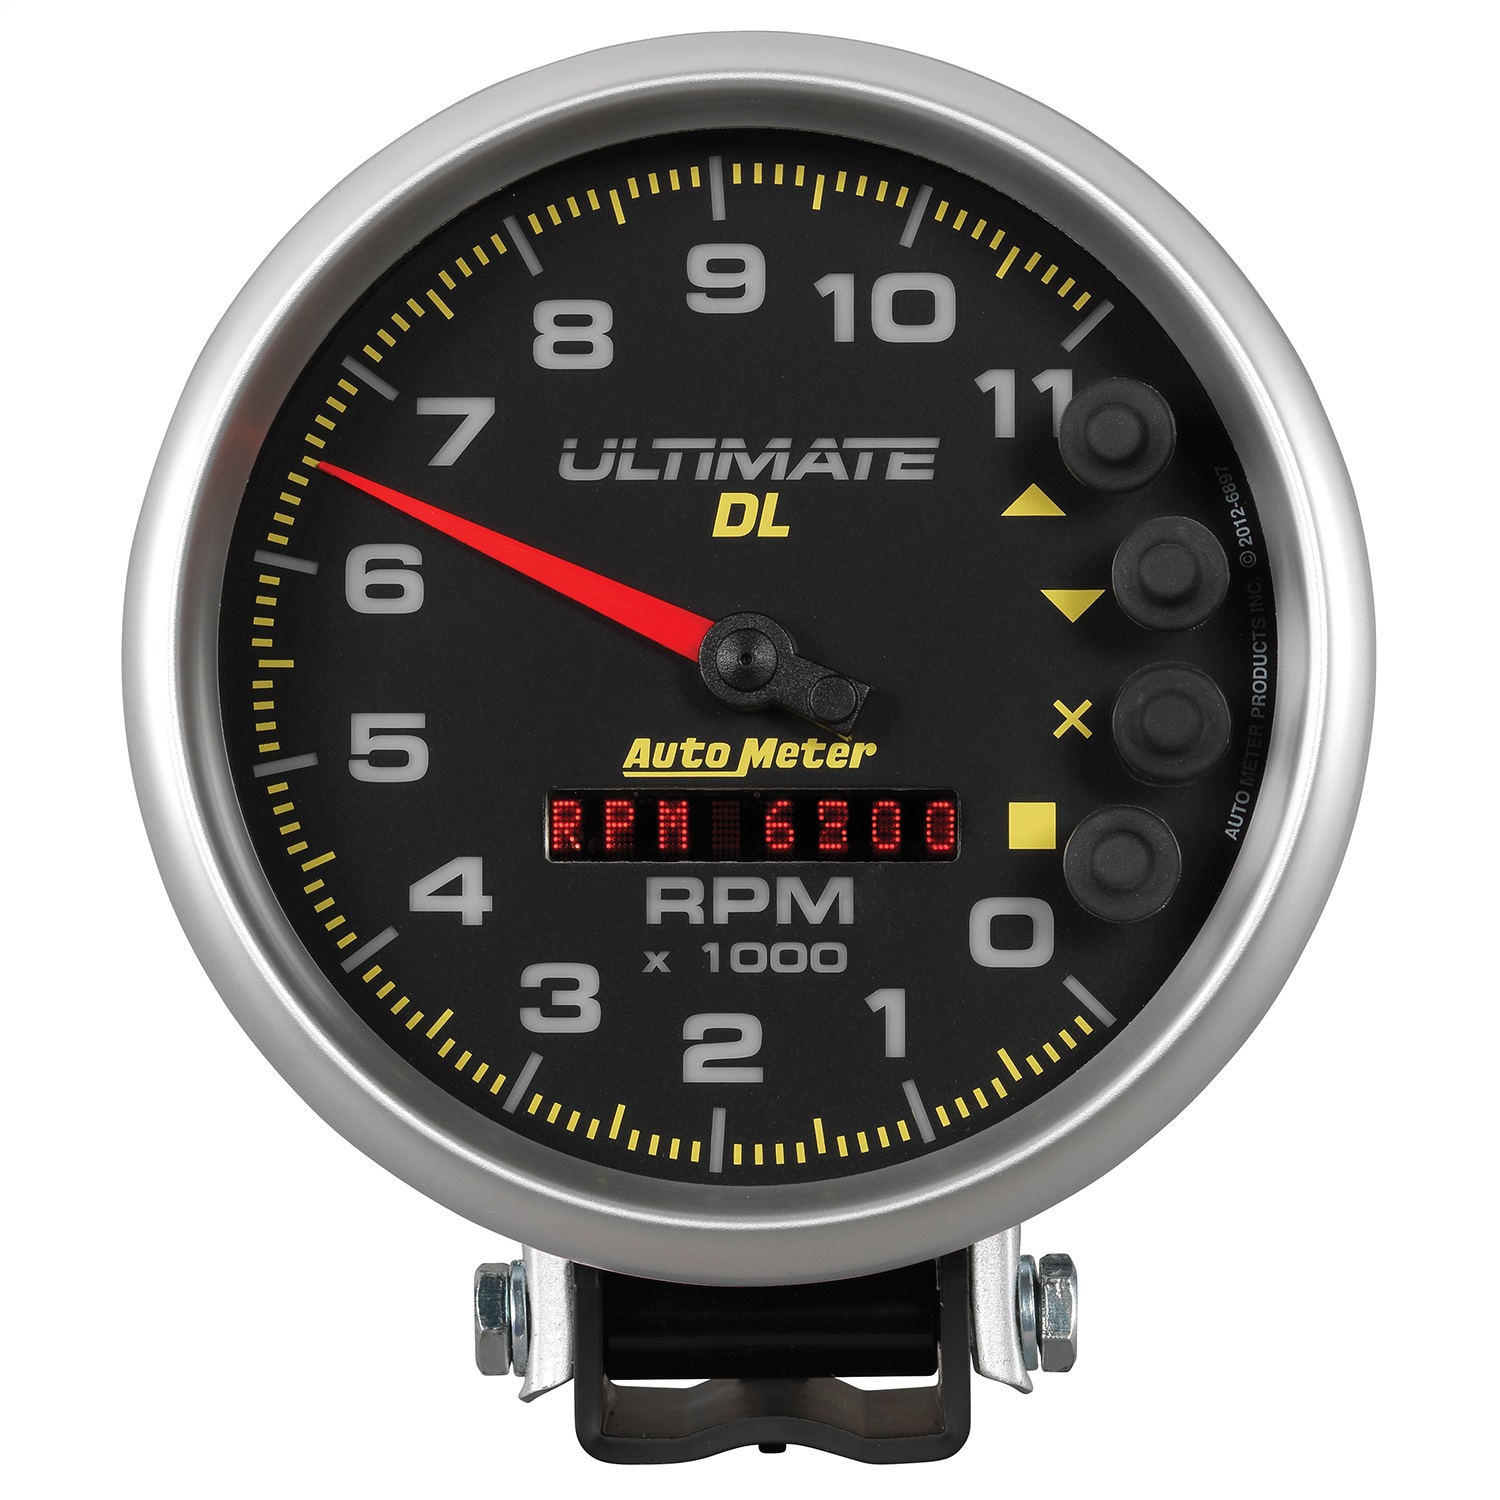 Auto Meter Auto Meter 6897 Ultimate DL Playback Tachometer